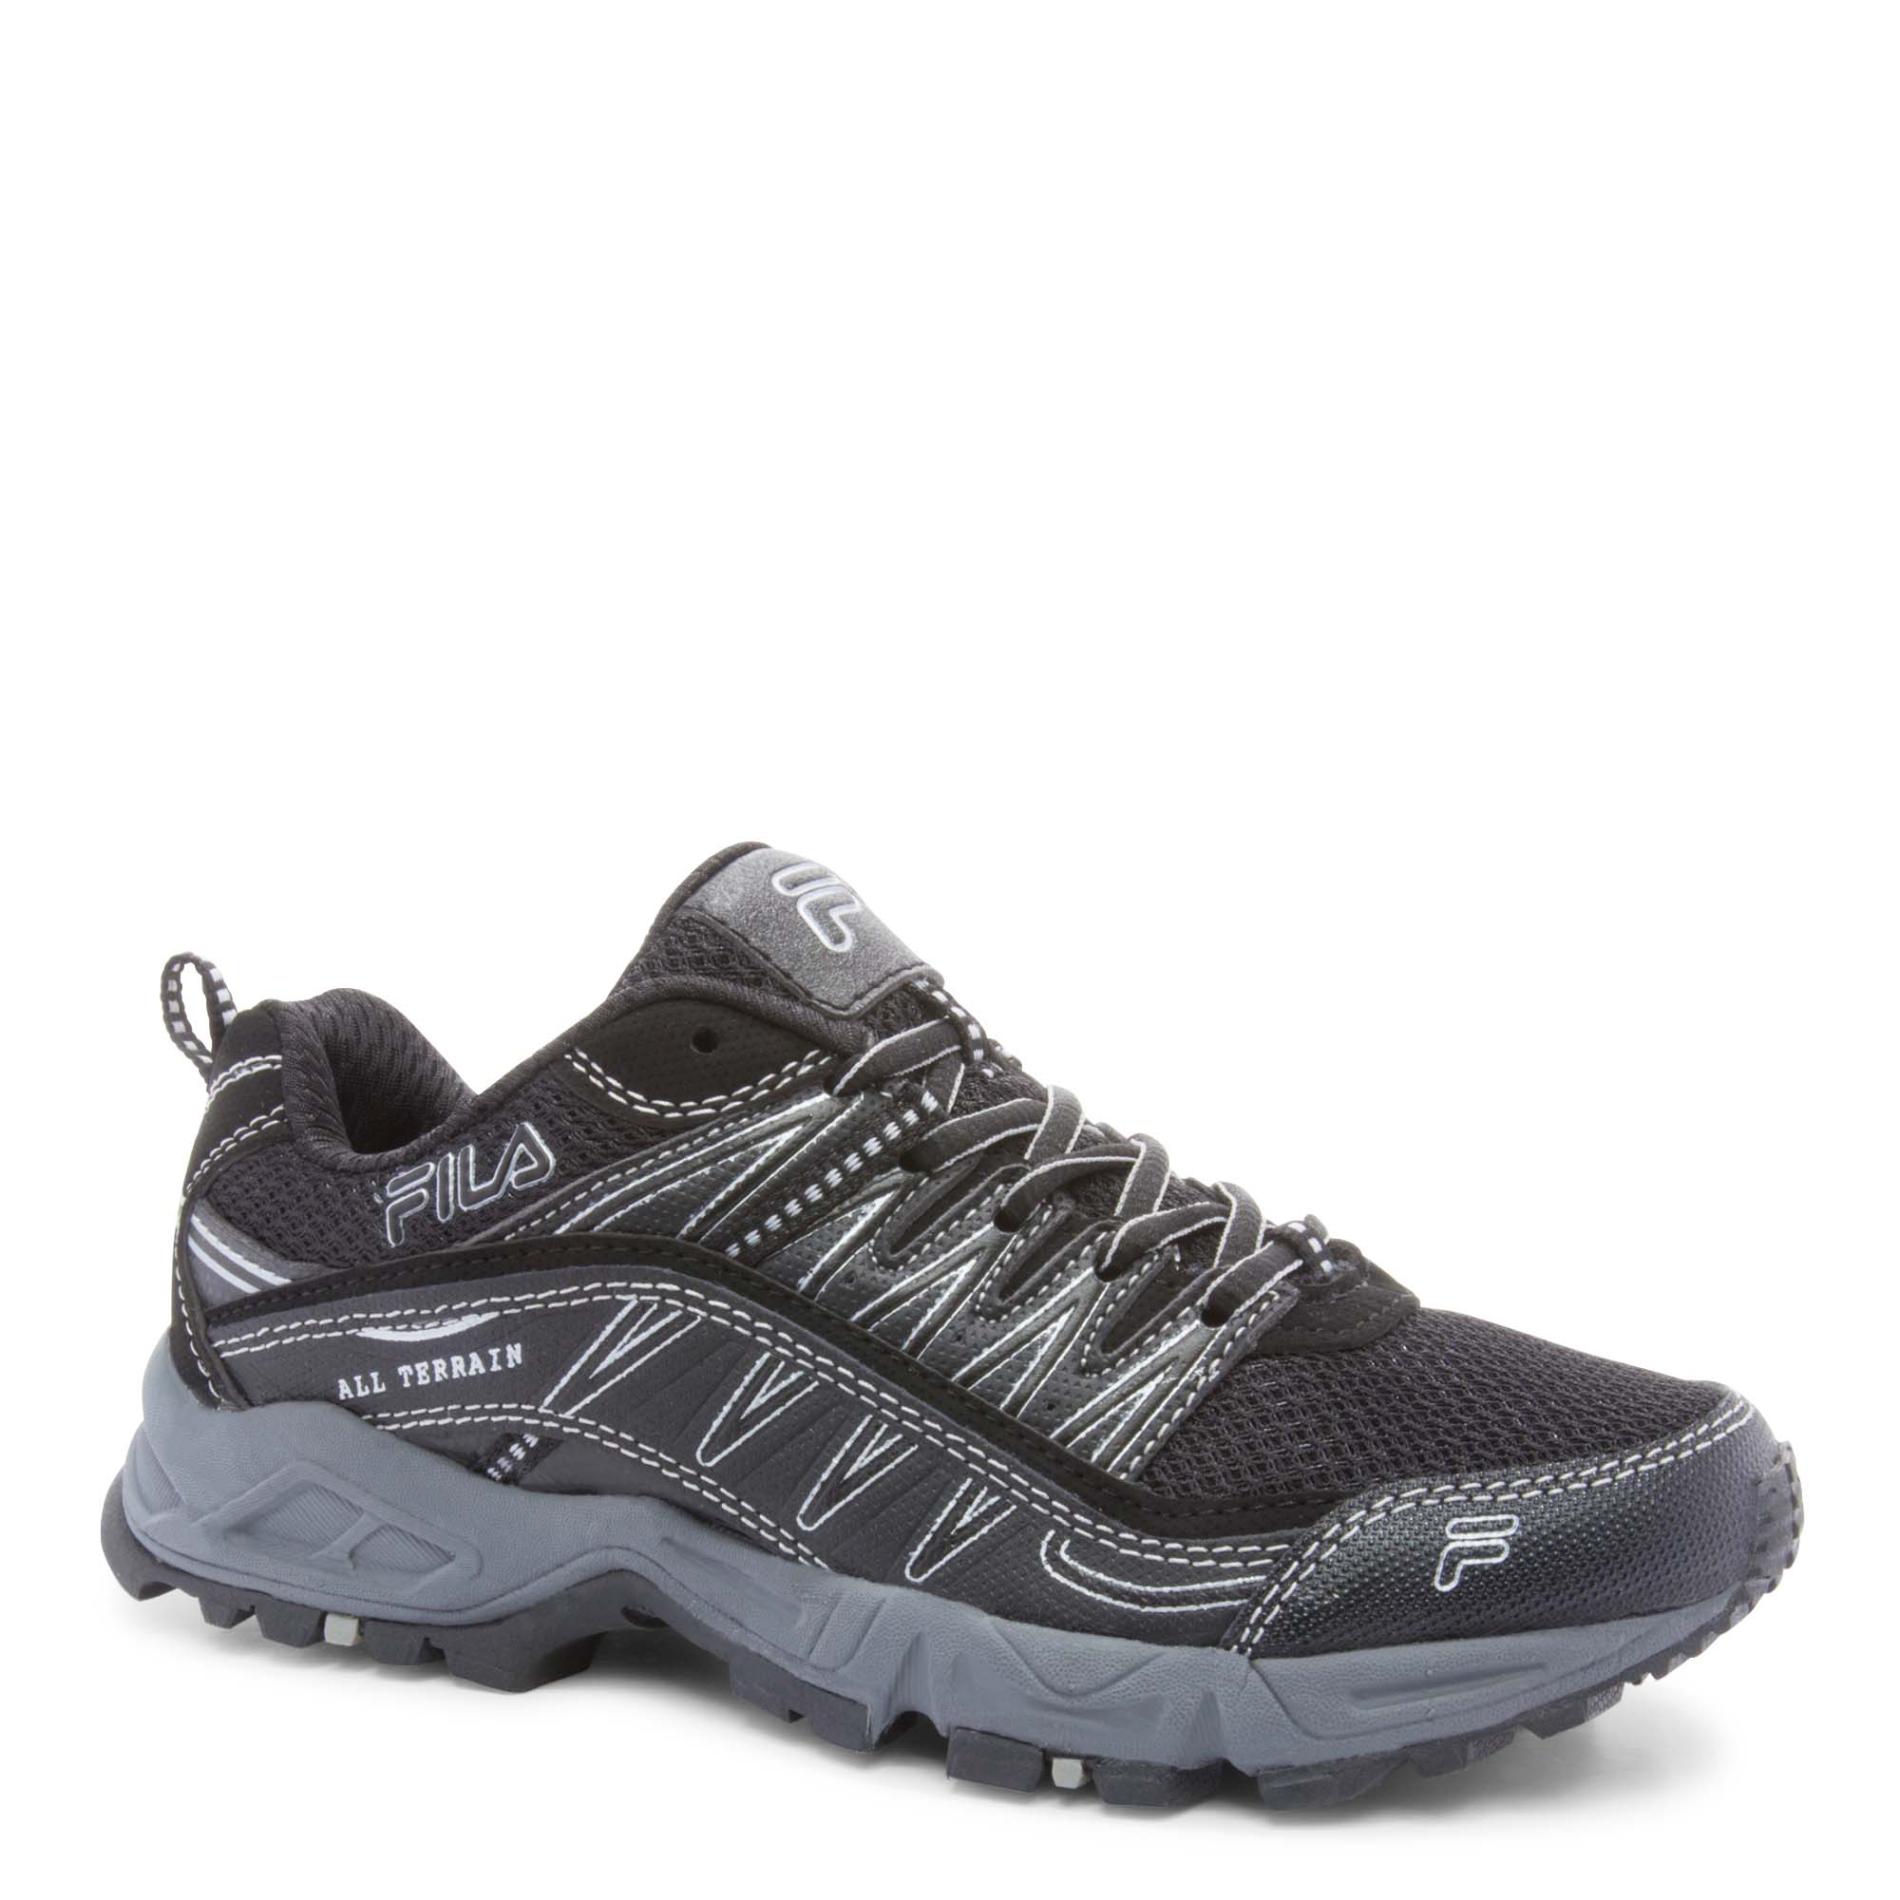 Fila Women's Peake Athletic Shoe - Black/Silver